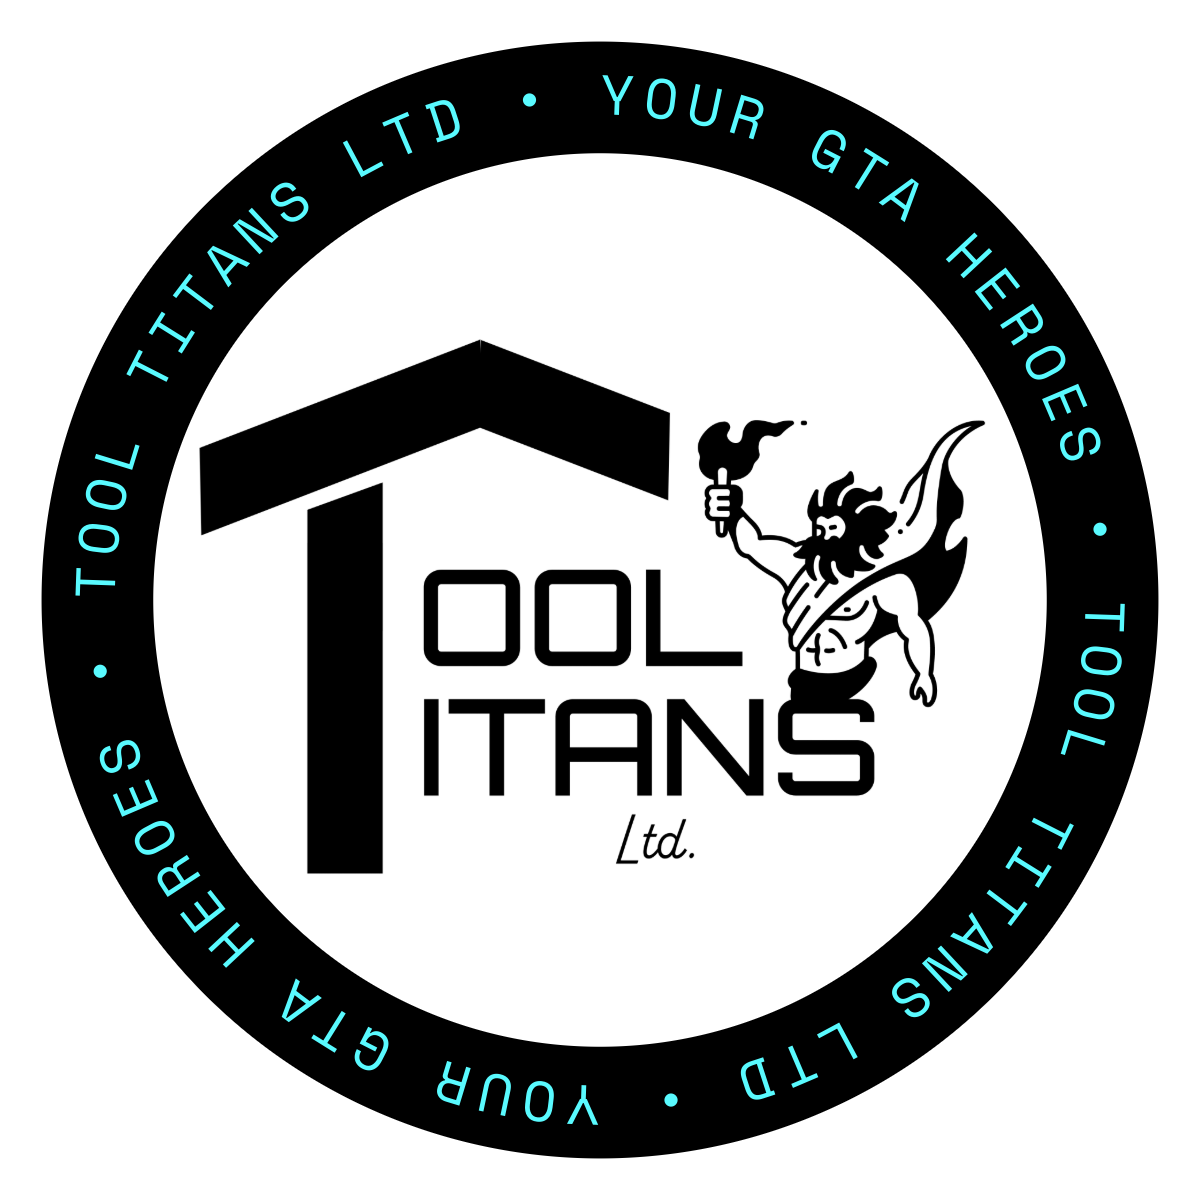 Tool Titans Ltd.'s logo